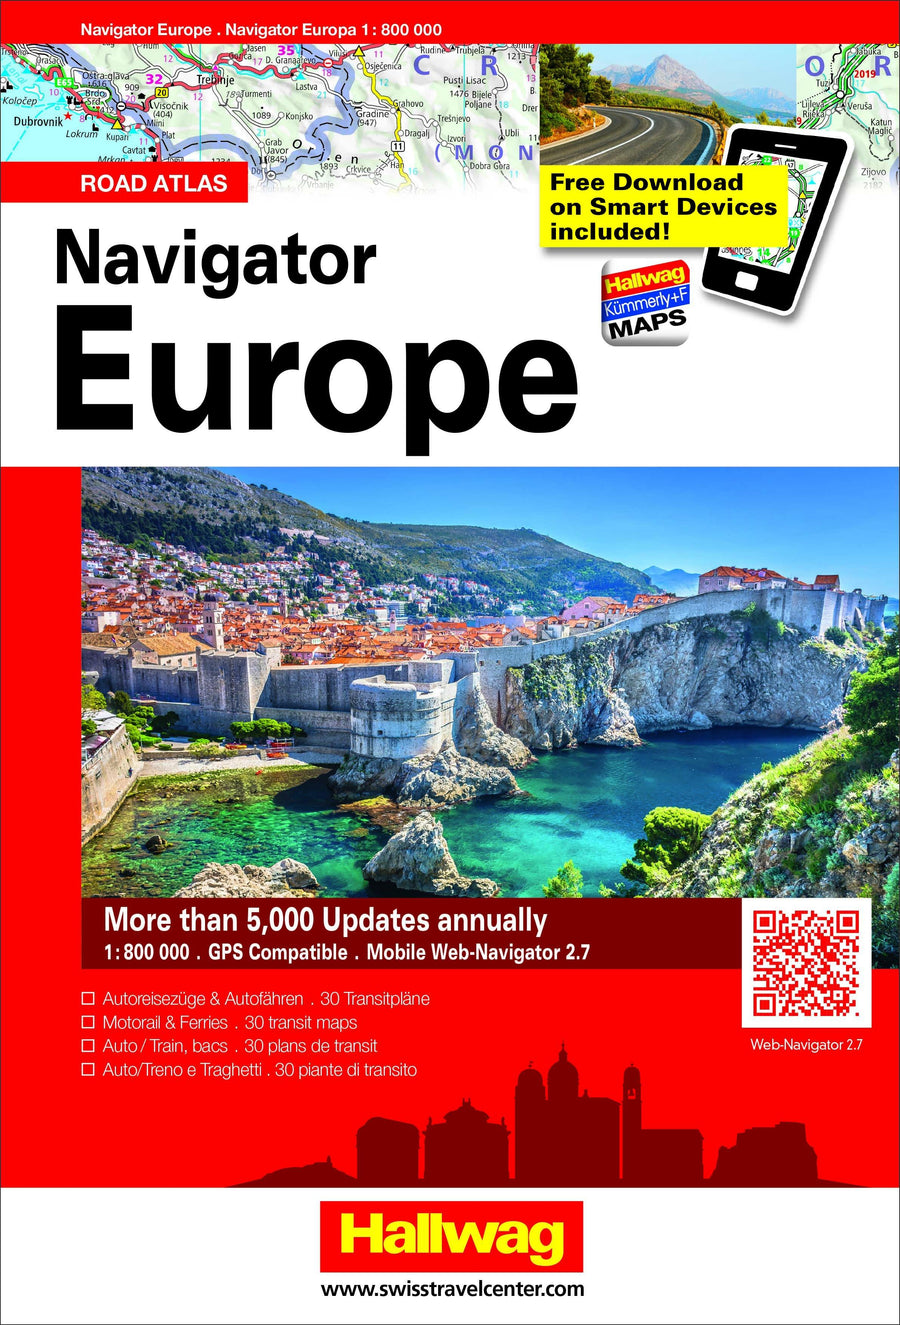 Atlas routier - Europe + web-navigator 2.7 | Hallwag atlas Hallwag 